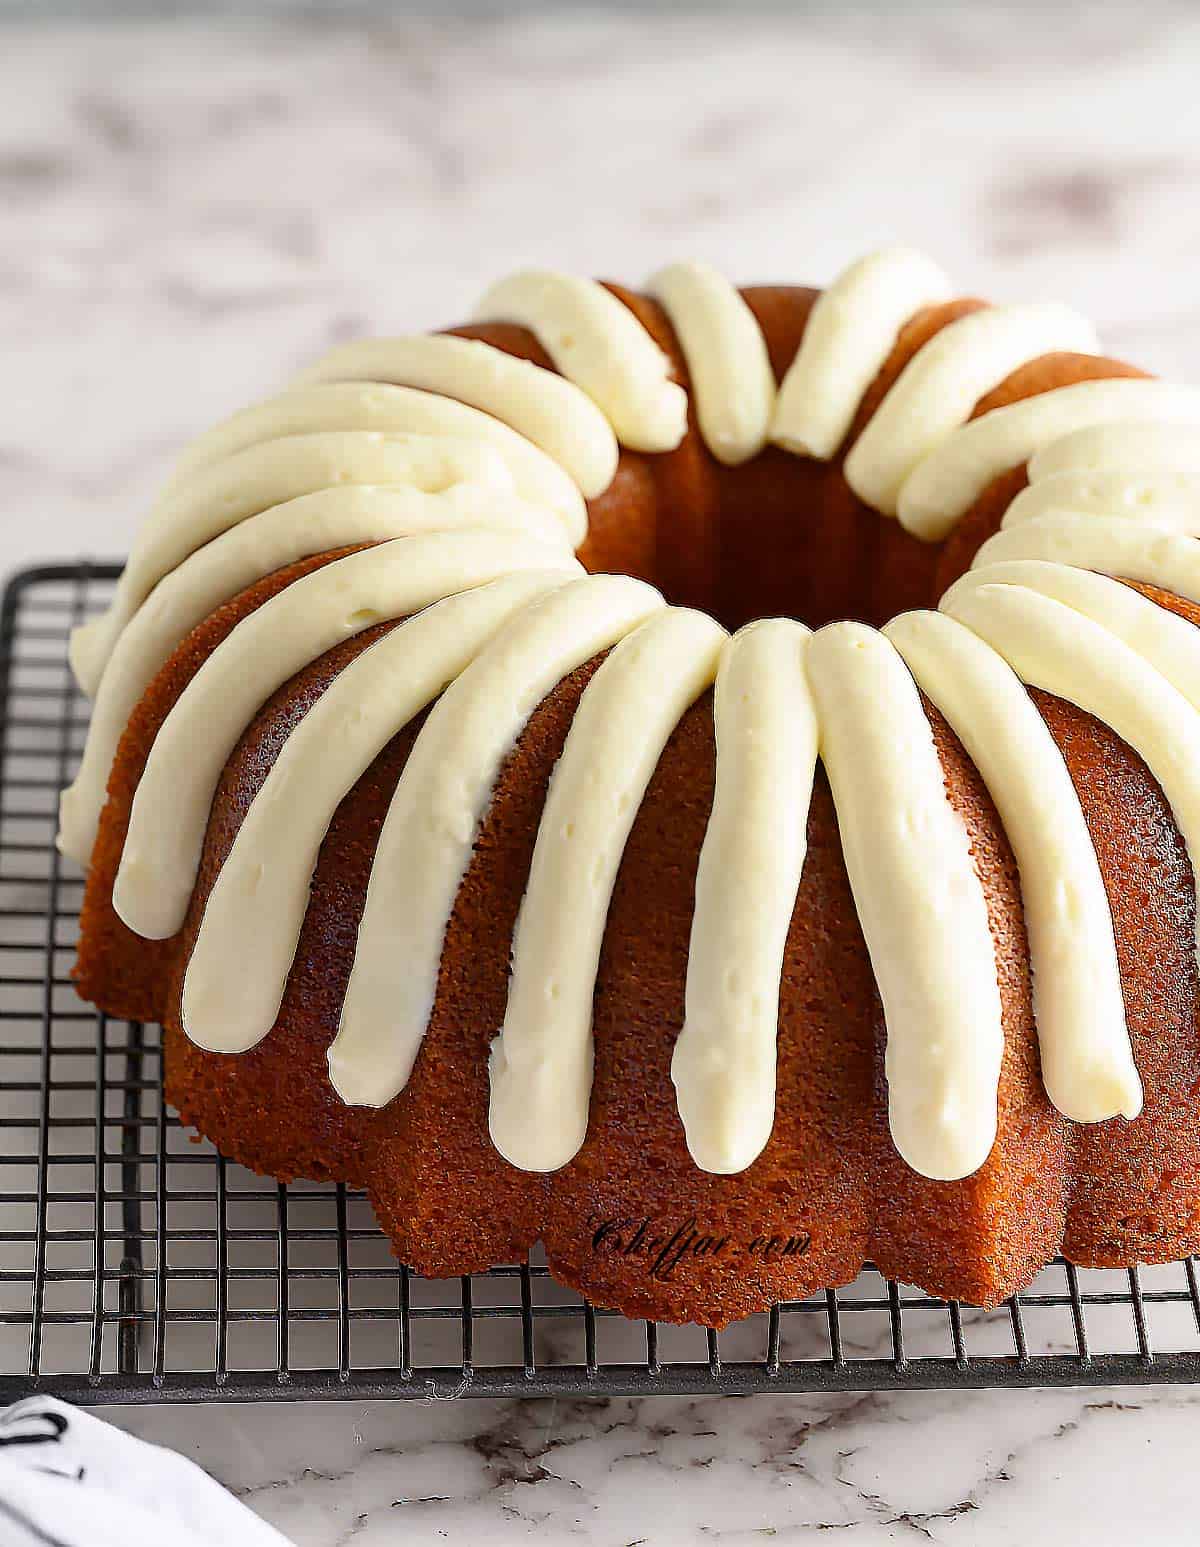 Vanilla Bundt Cake from Scratch - Chefjar